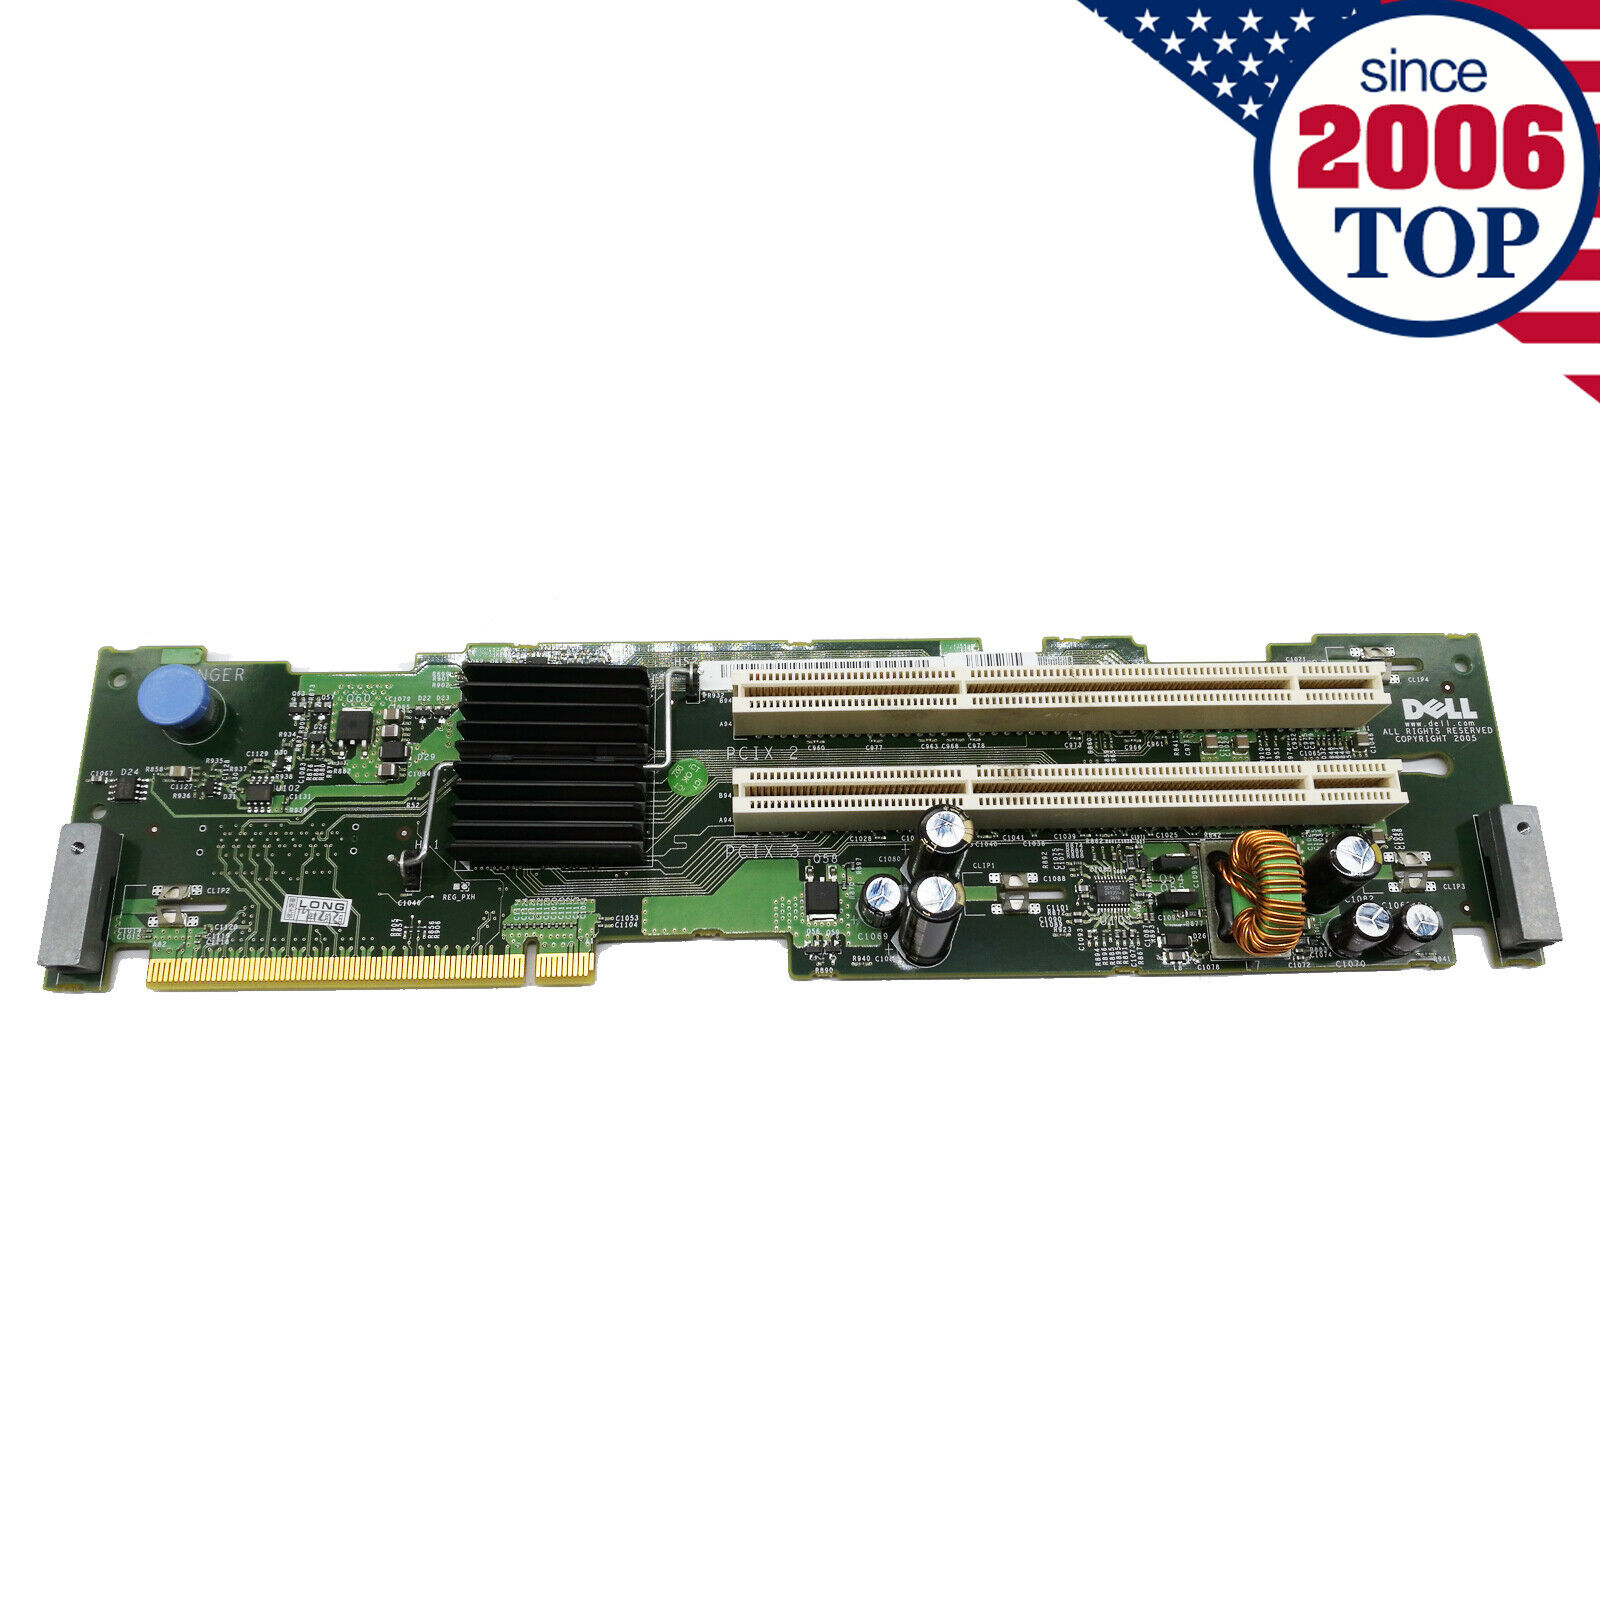 Dell PowerEdge 2950 PCI-X Riser Card Expansion Board H6188 0H6188 w/o Bracket US